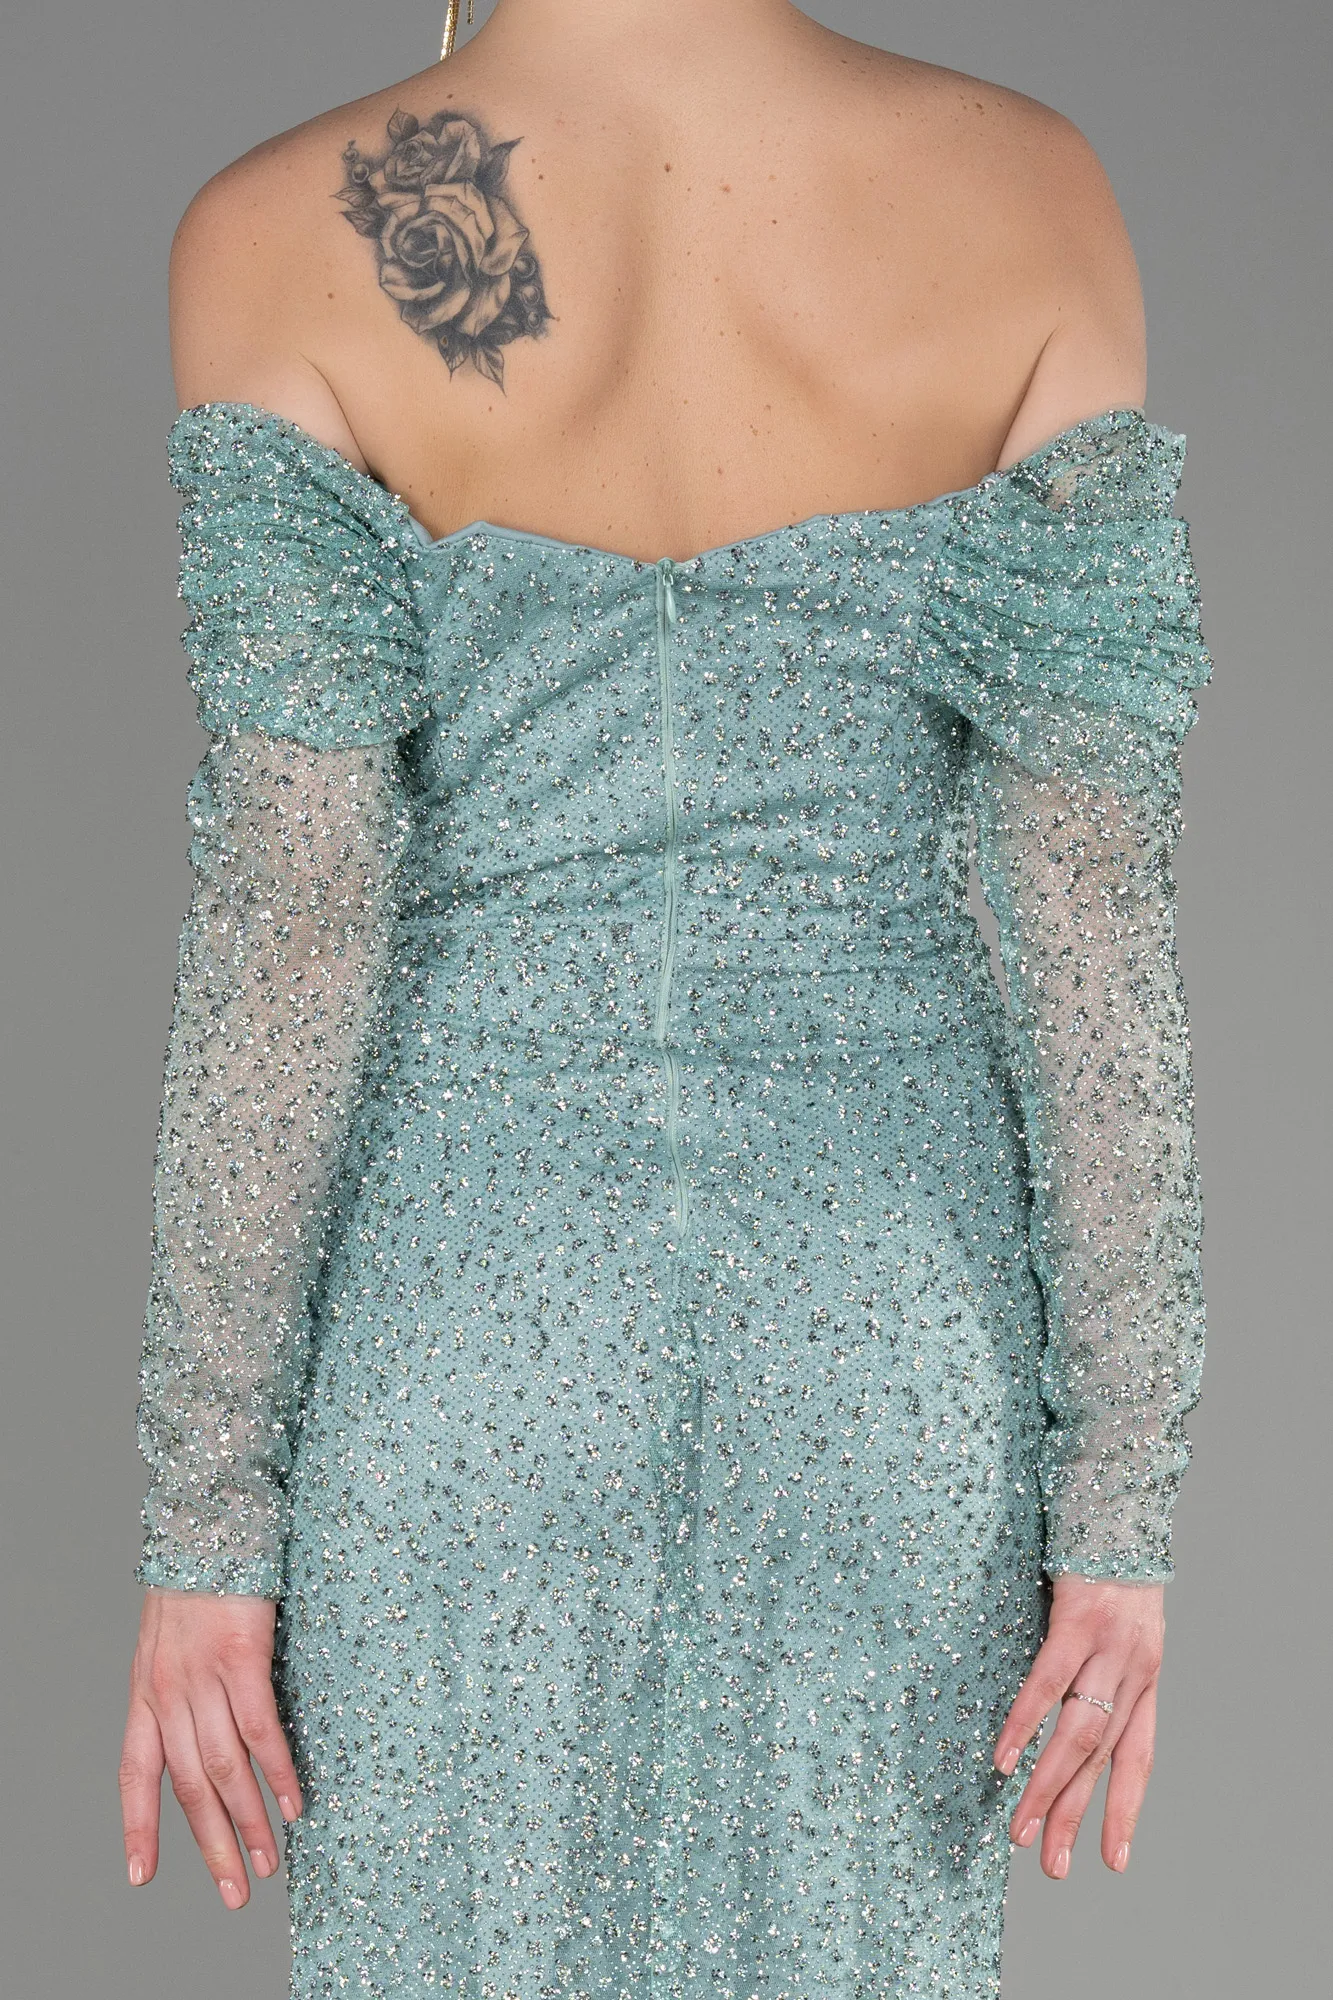 Turquoise-Long Mermaid Prom Dress ABU3777